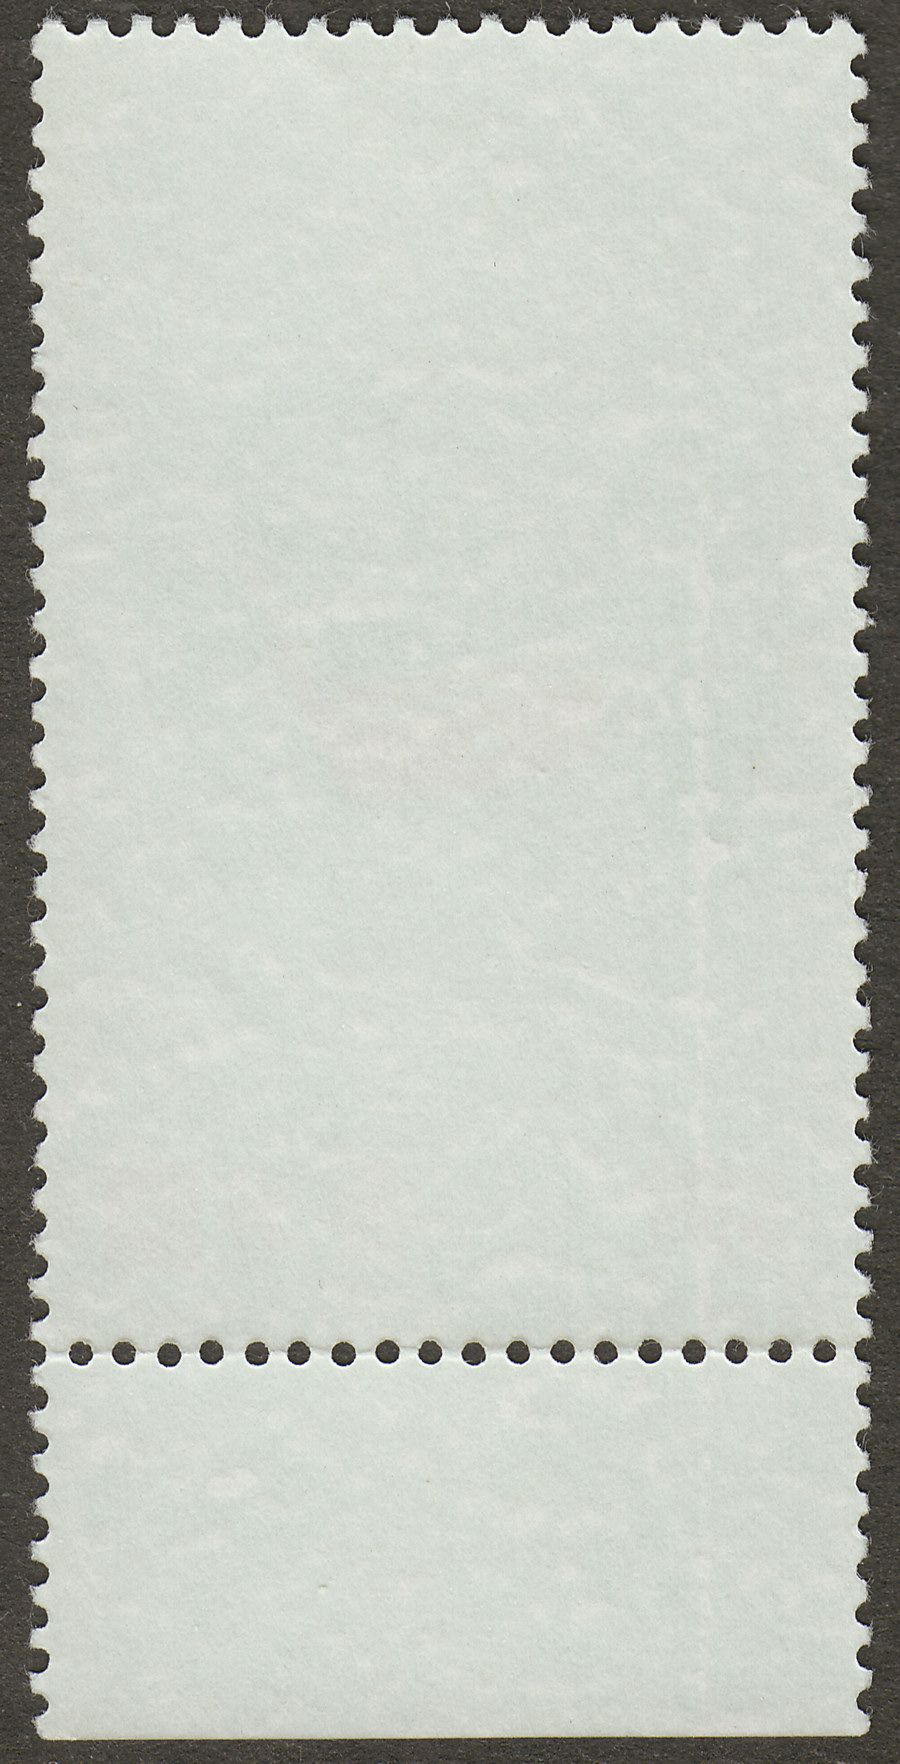 Hong Kong 1977 QEII Tourism $1.30c watermark Inverted Mint SG366w